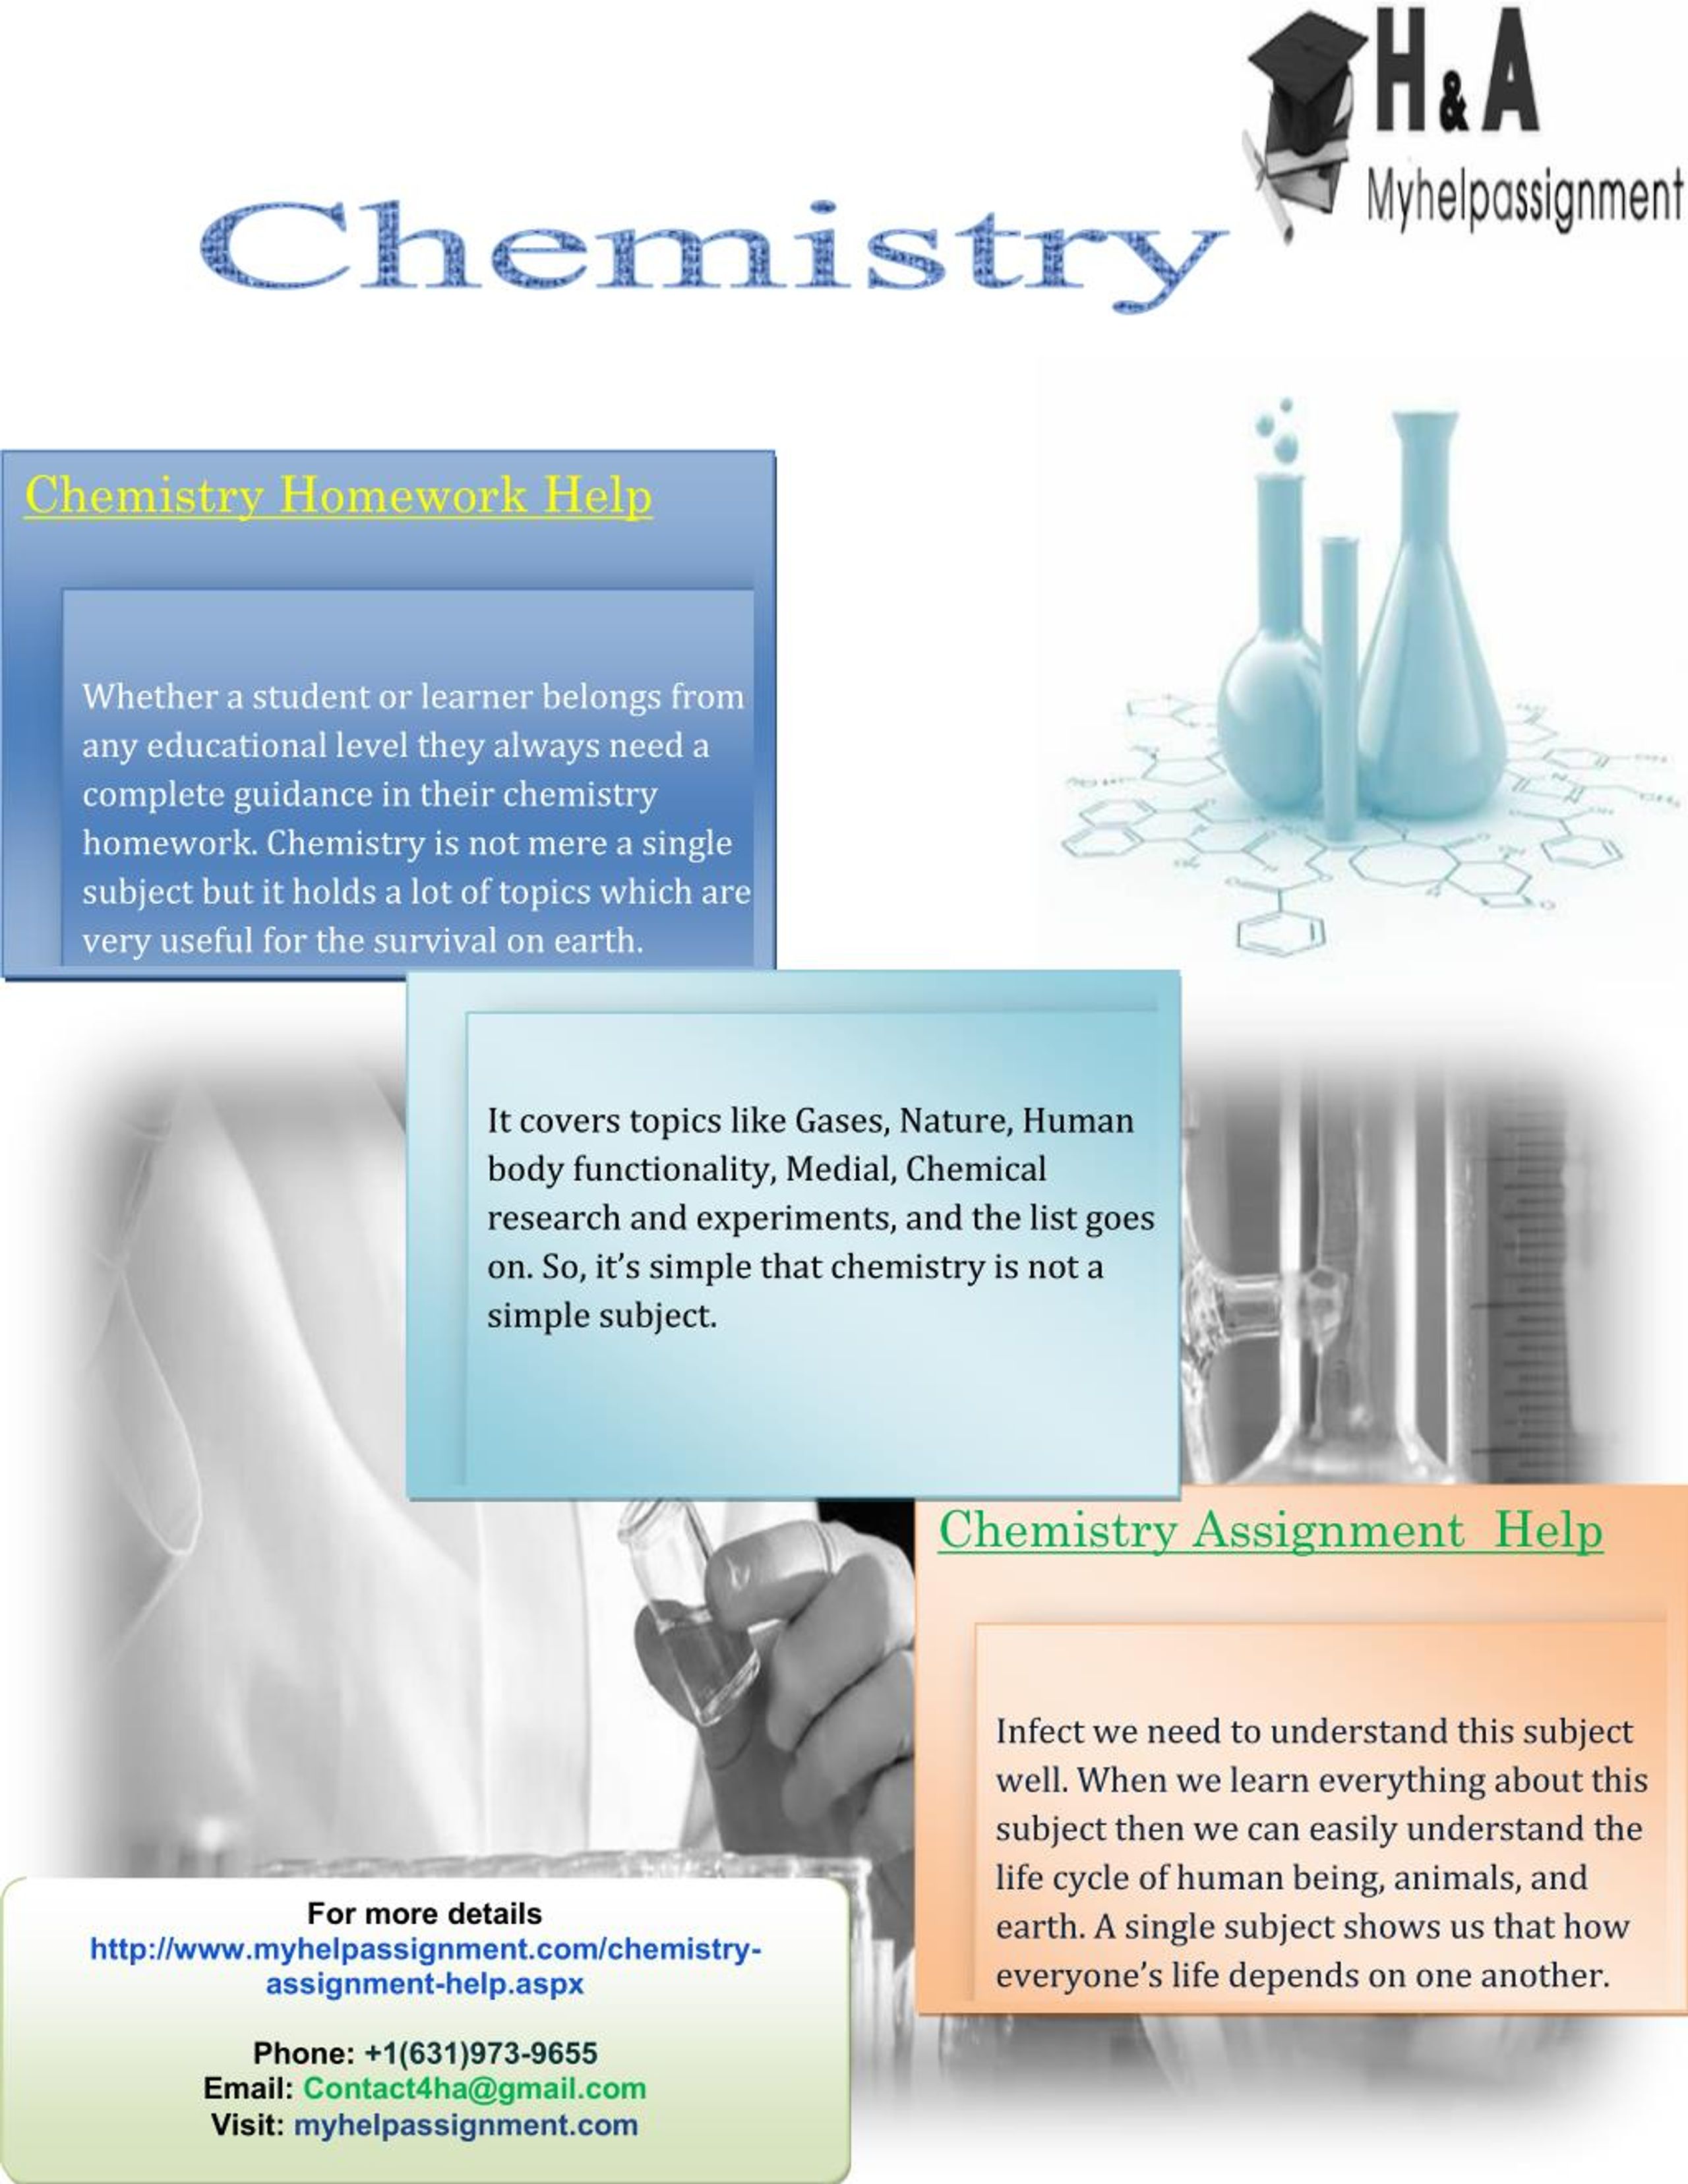 foundations of chemistry homework